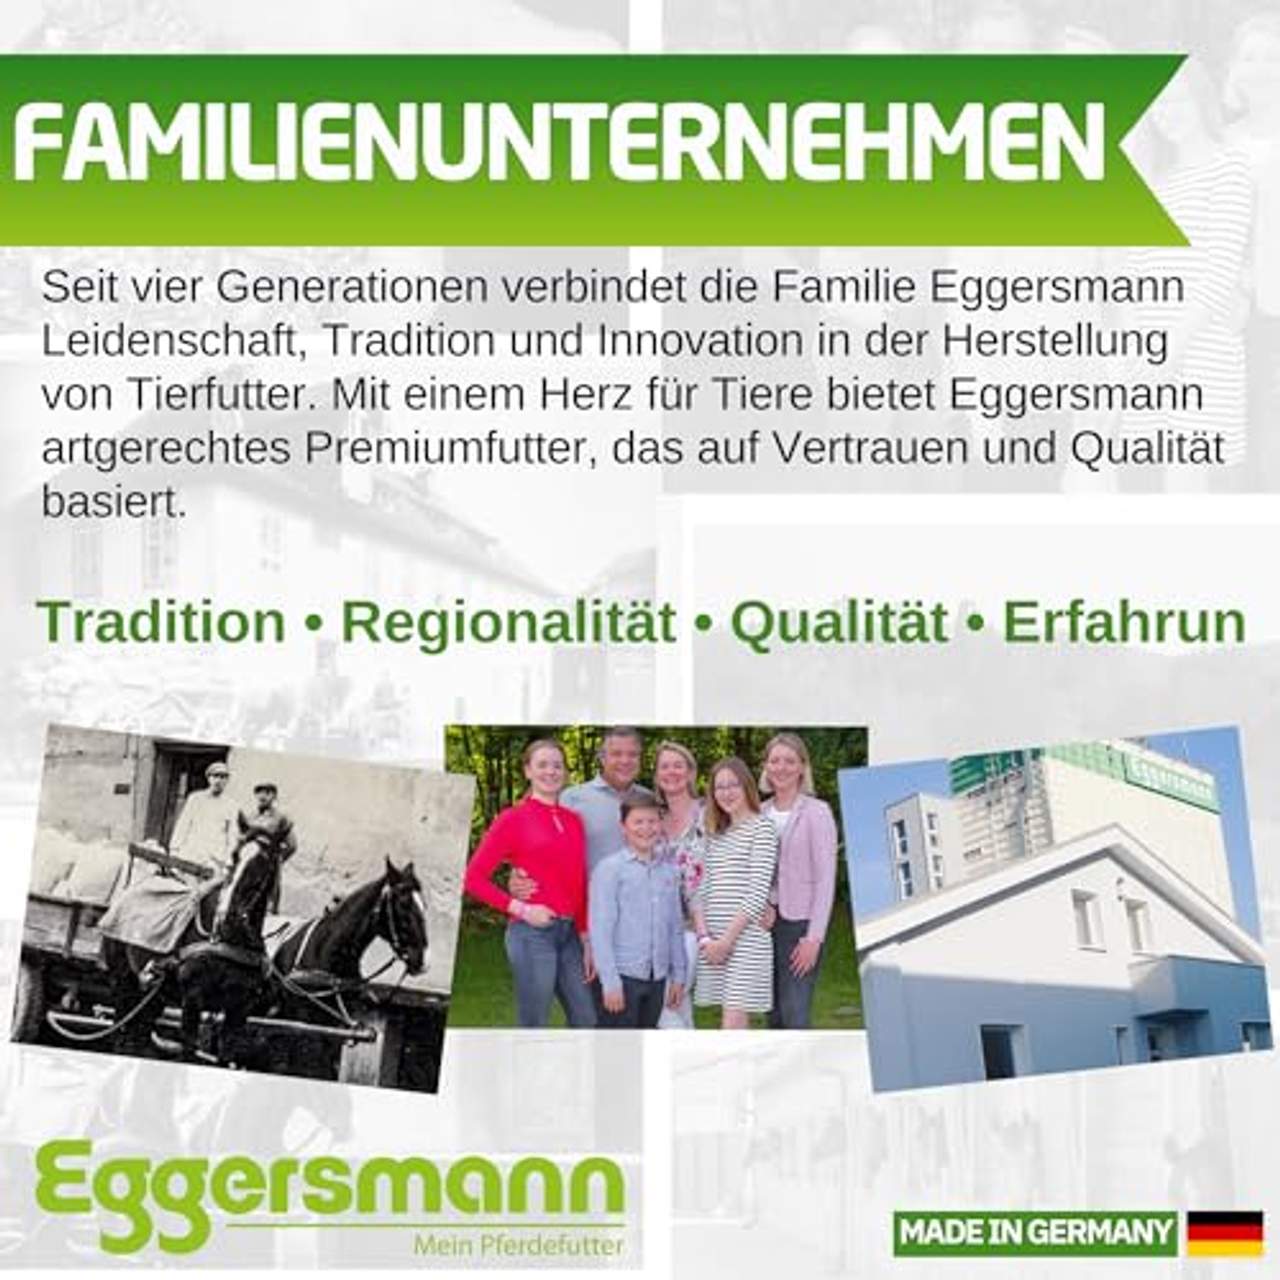 Eggersmann EMH Classic Müsli